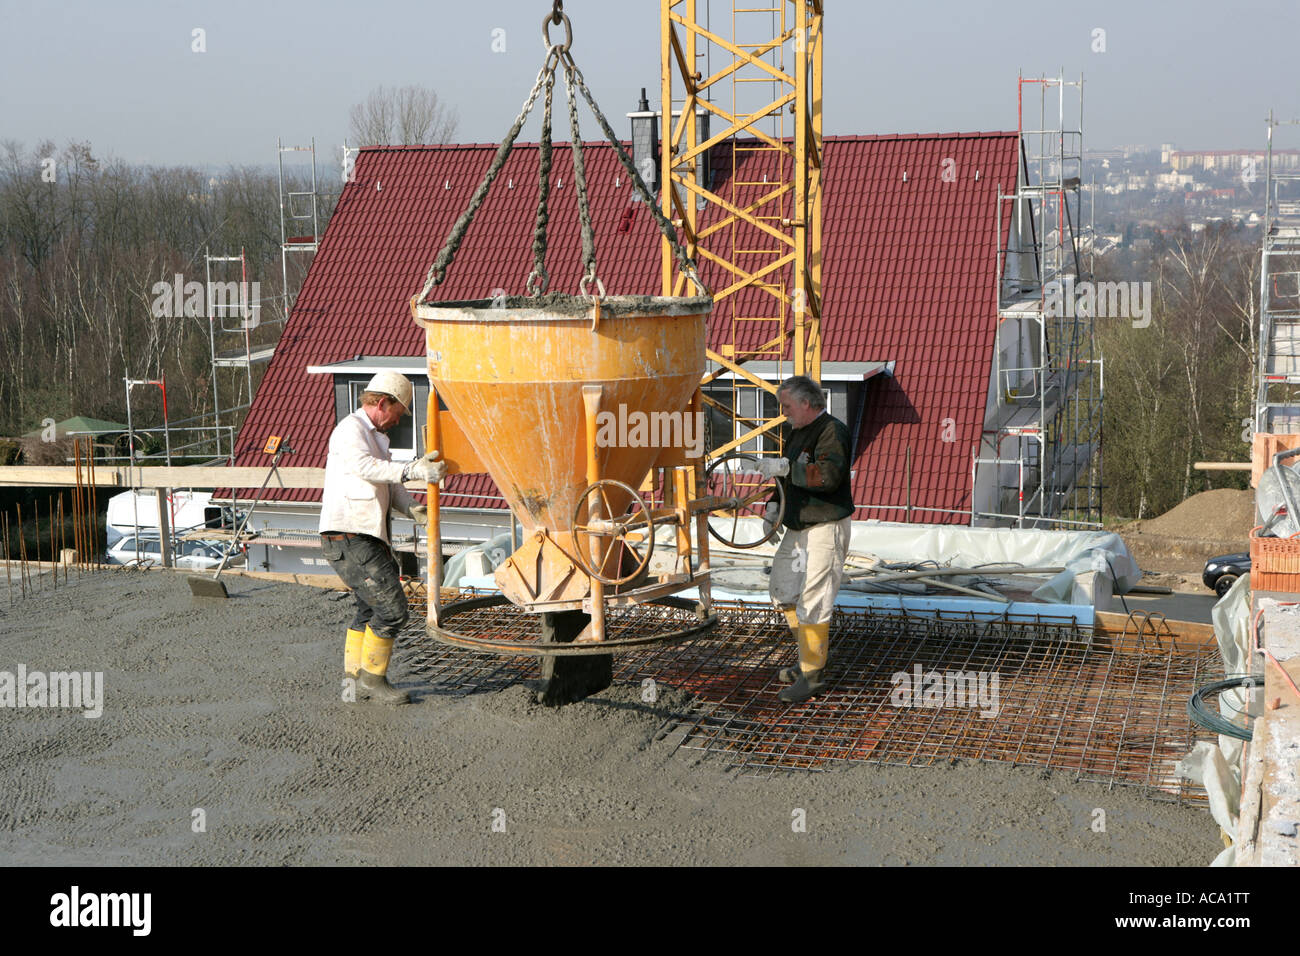 Concrete works on a construction site, Essen, North Rhine-Westphalia, Germany Stock Photo